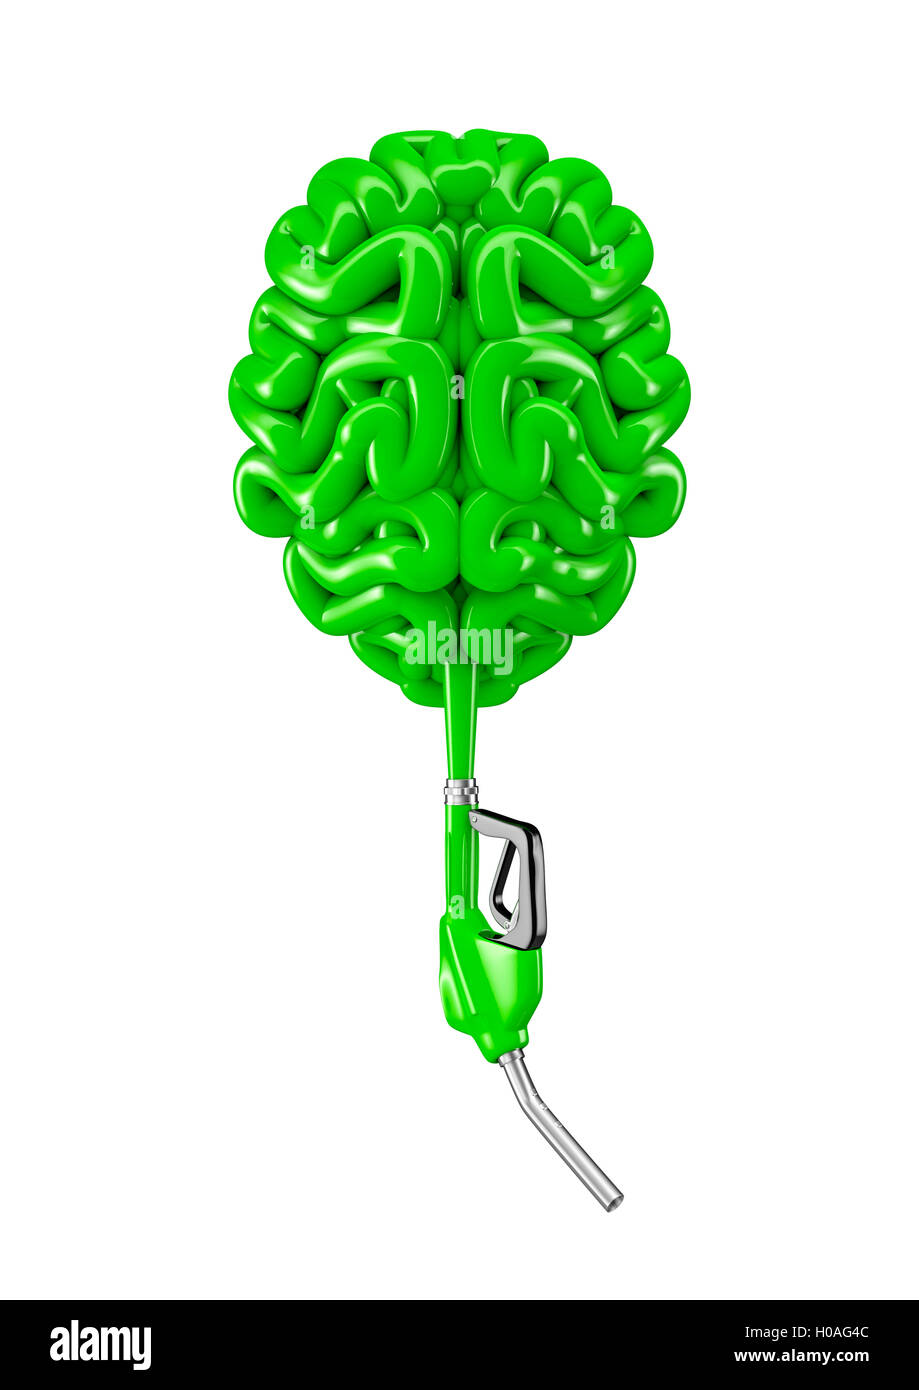 Petrol hose brain / 3D illustration of brain as coiled petrol hose Stock Photo